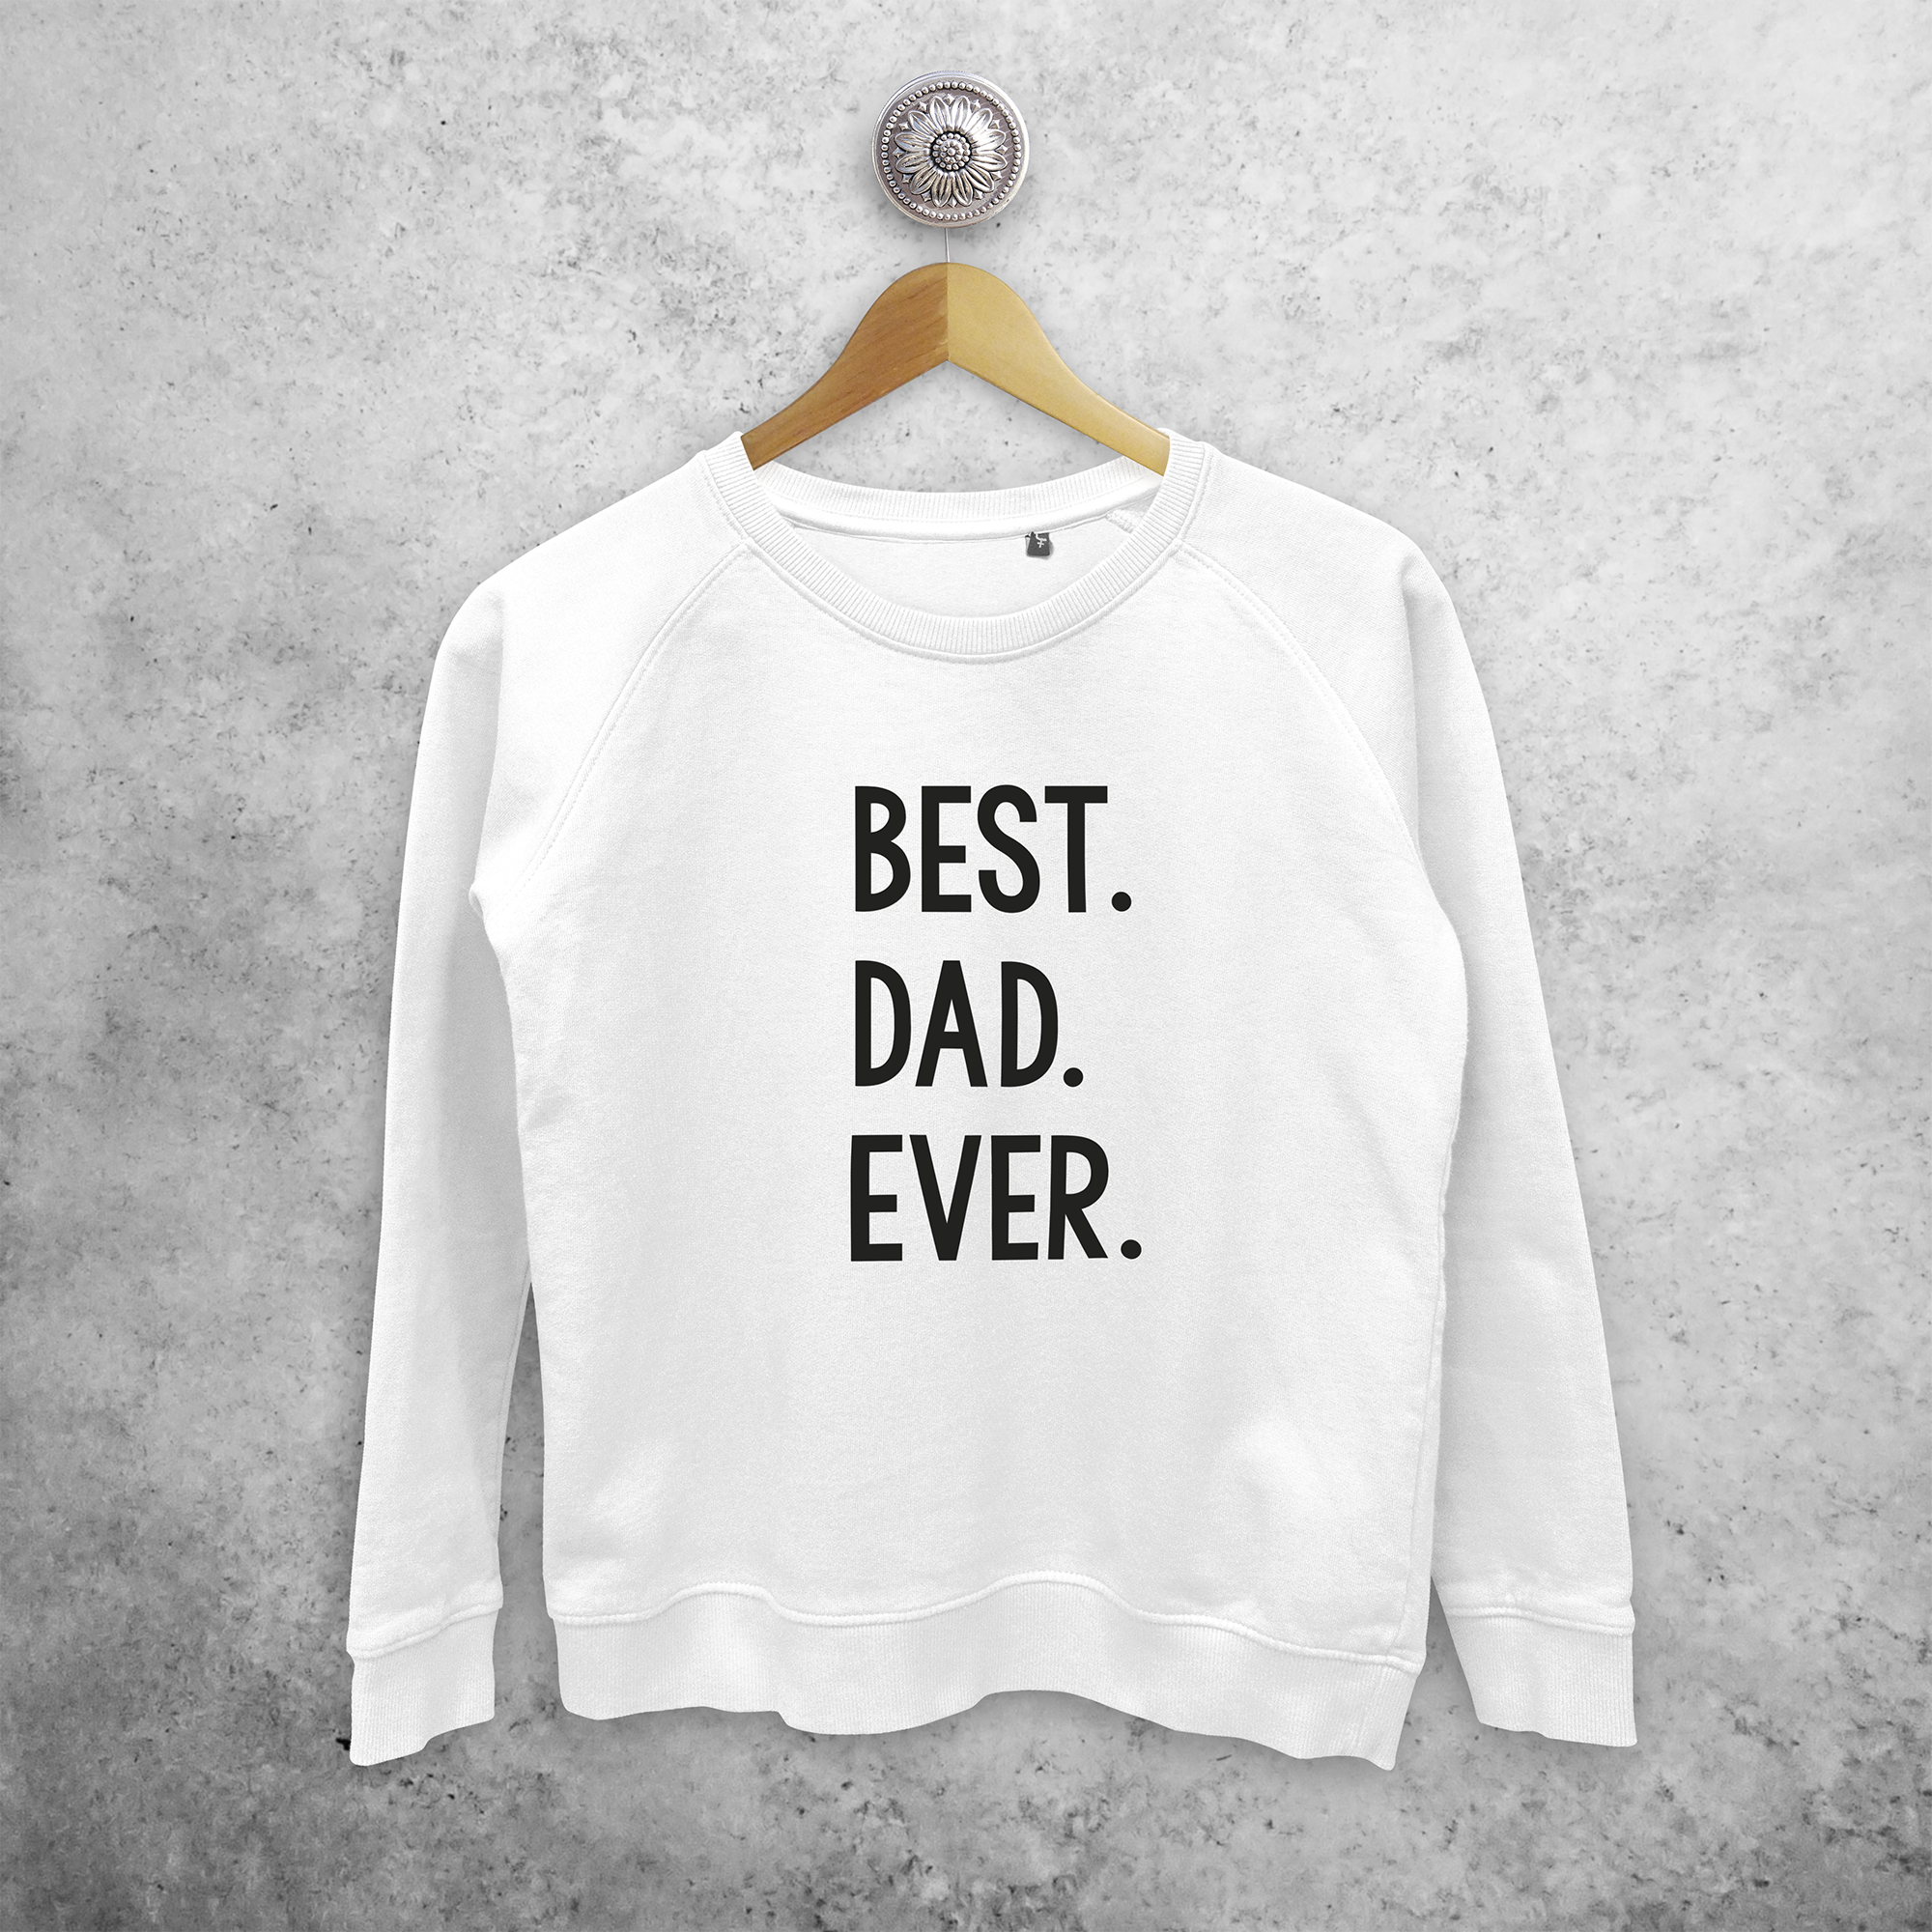 'Best. Dad. Ever.' sweater